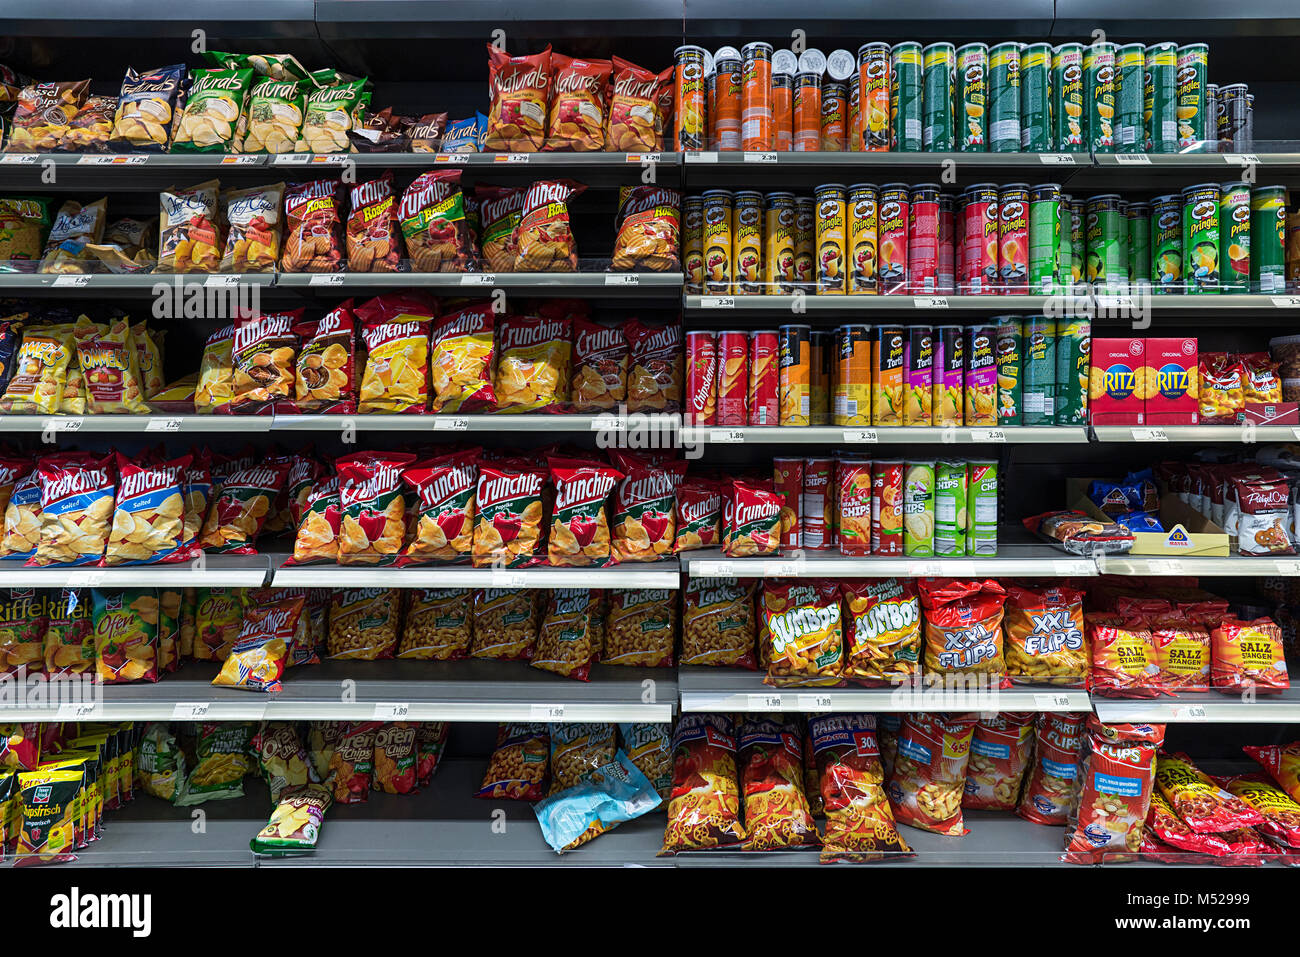 Estante supermercado fotografías e imágenes de alta resolución - Alamy